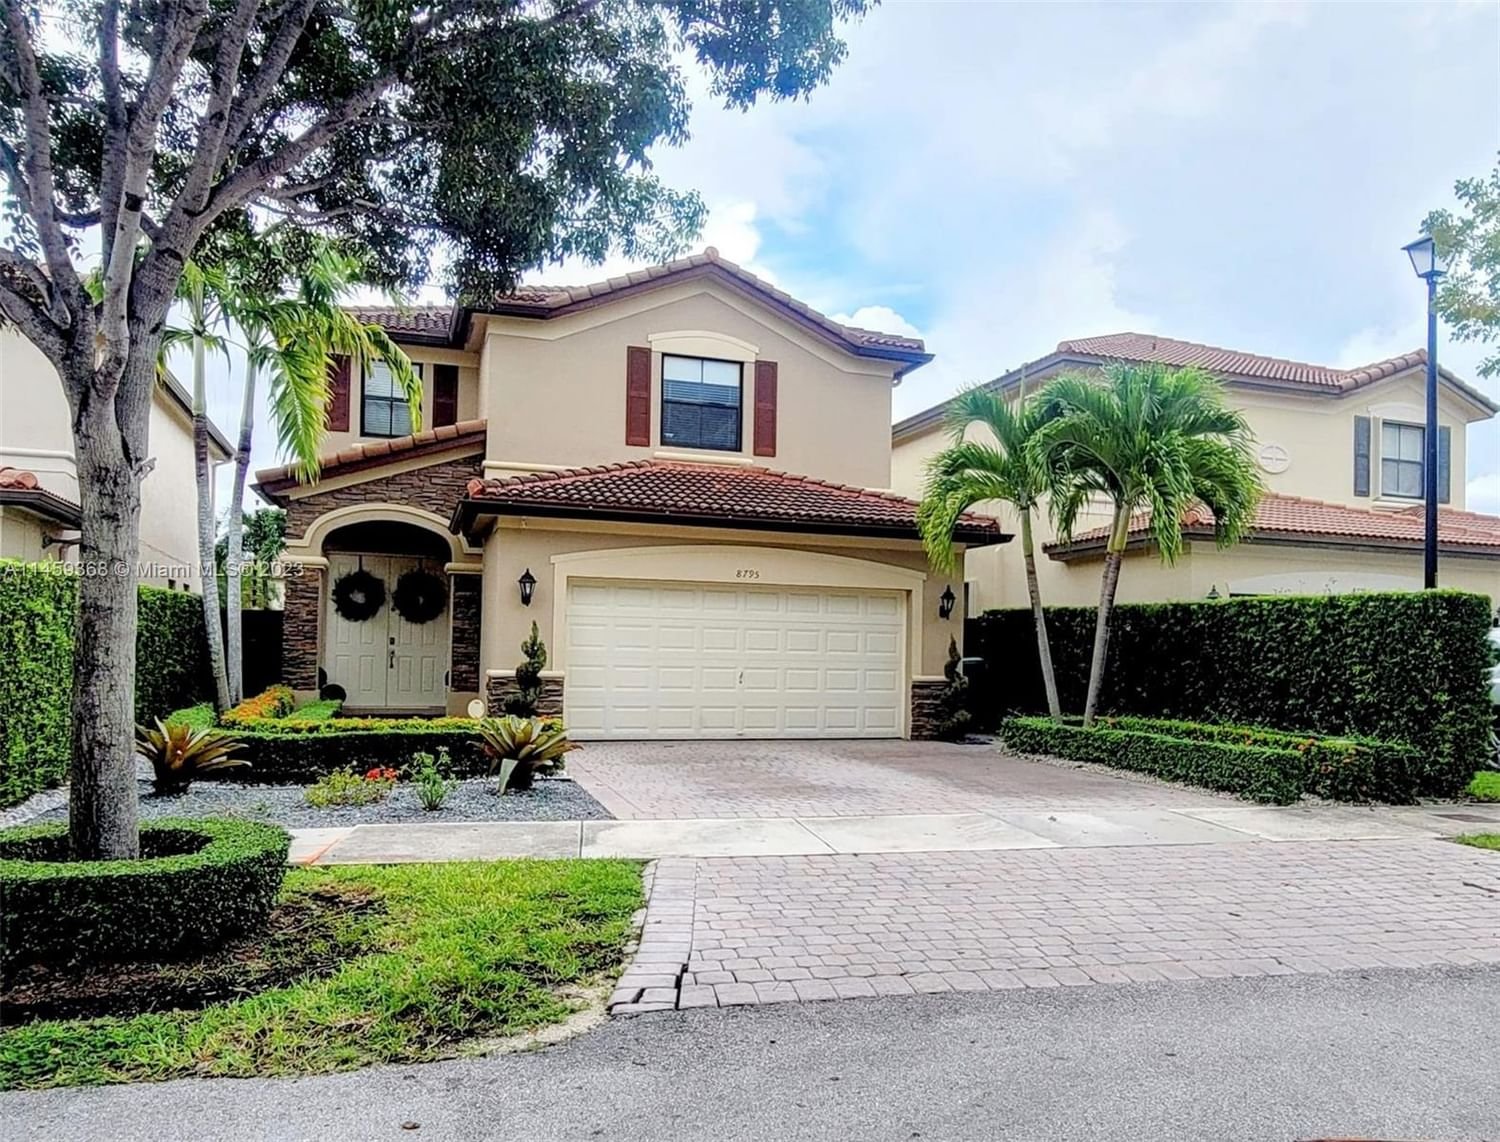 Real estate property located at 8795 115th Ct, Miami-Dade County, ST MORITZ ESTATES, Doral, FL